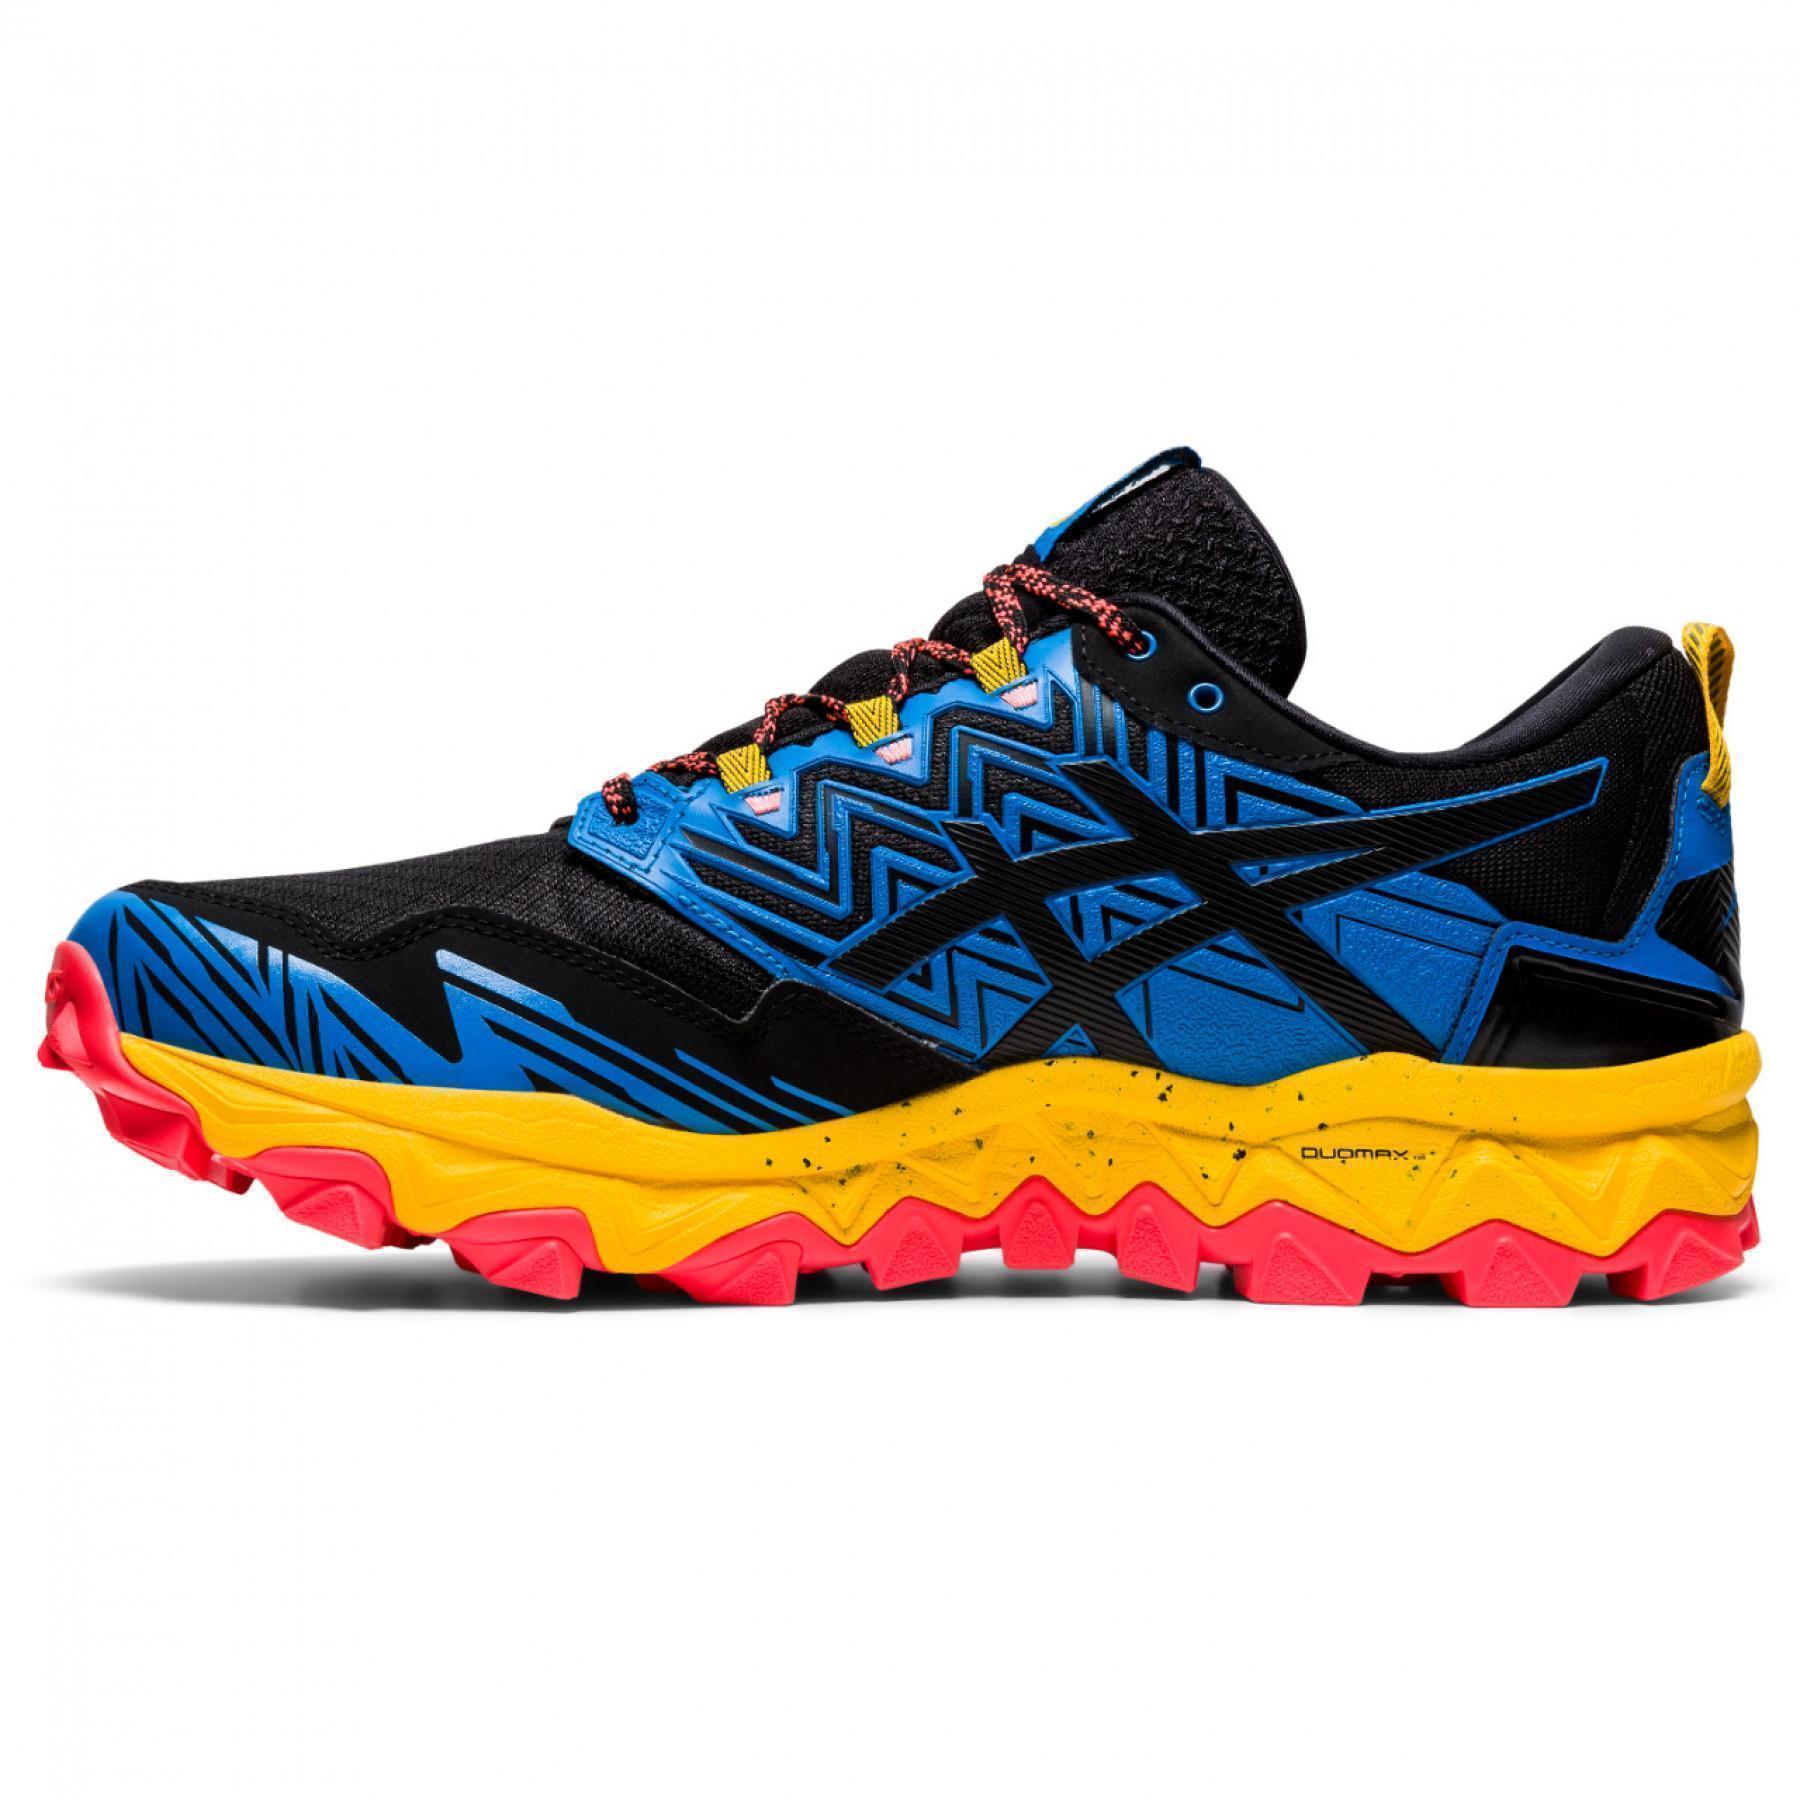 Chaussures de trail Asics Gel-Fujitrabuco 8 G-Tx